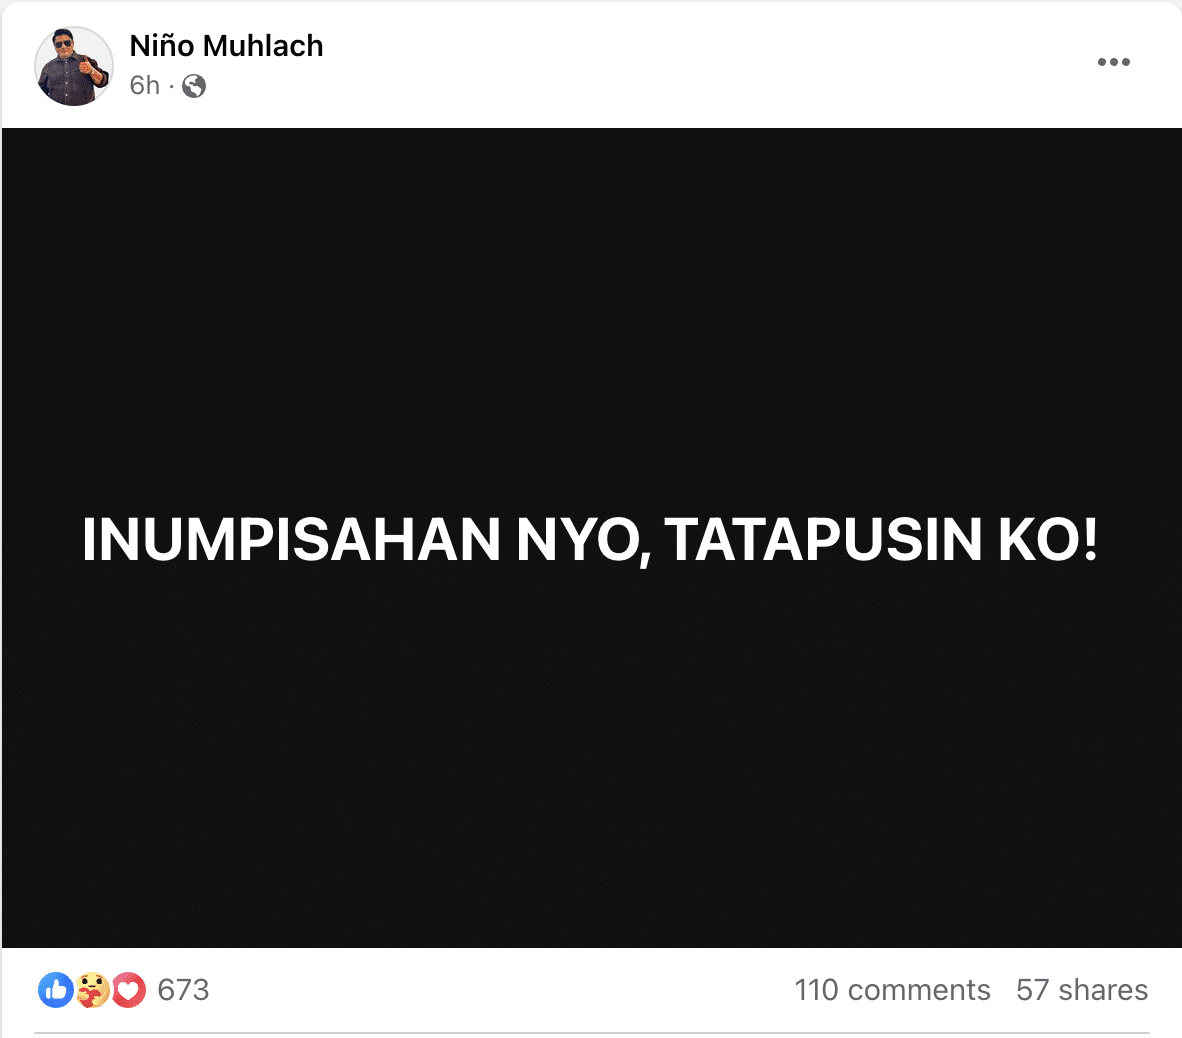 Niño Muhlach drops cryptic post: 'Inumpisahan niyo, tatapusin ko!'